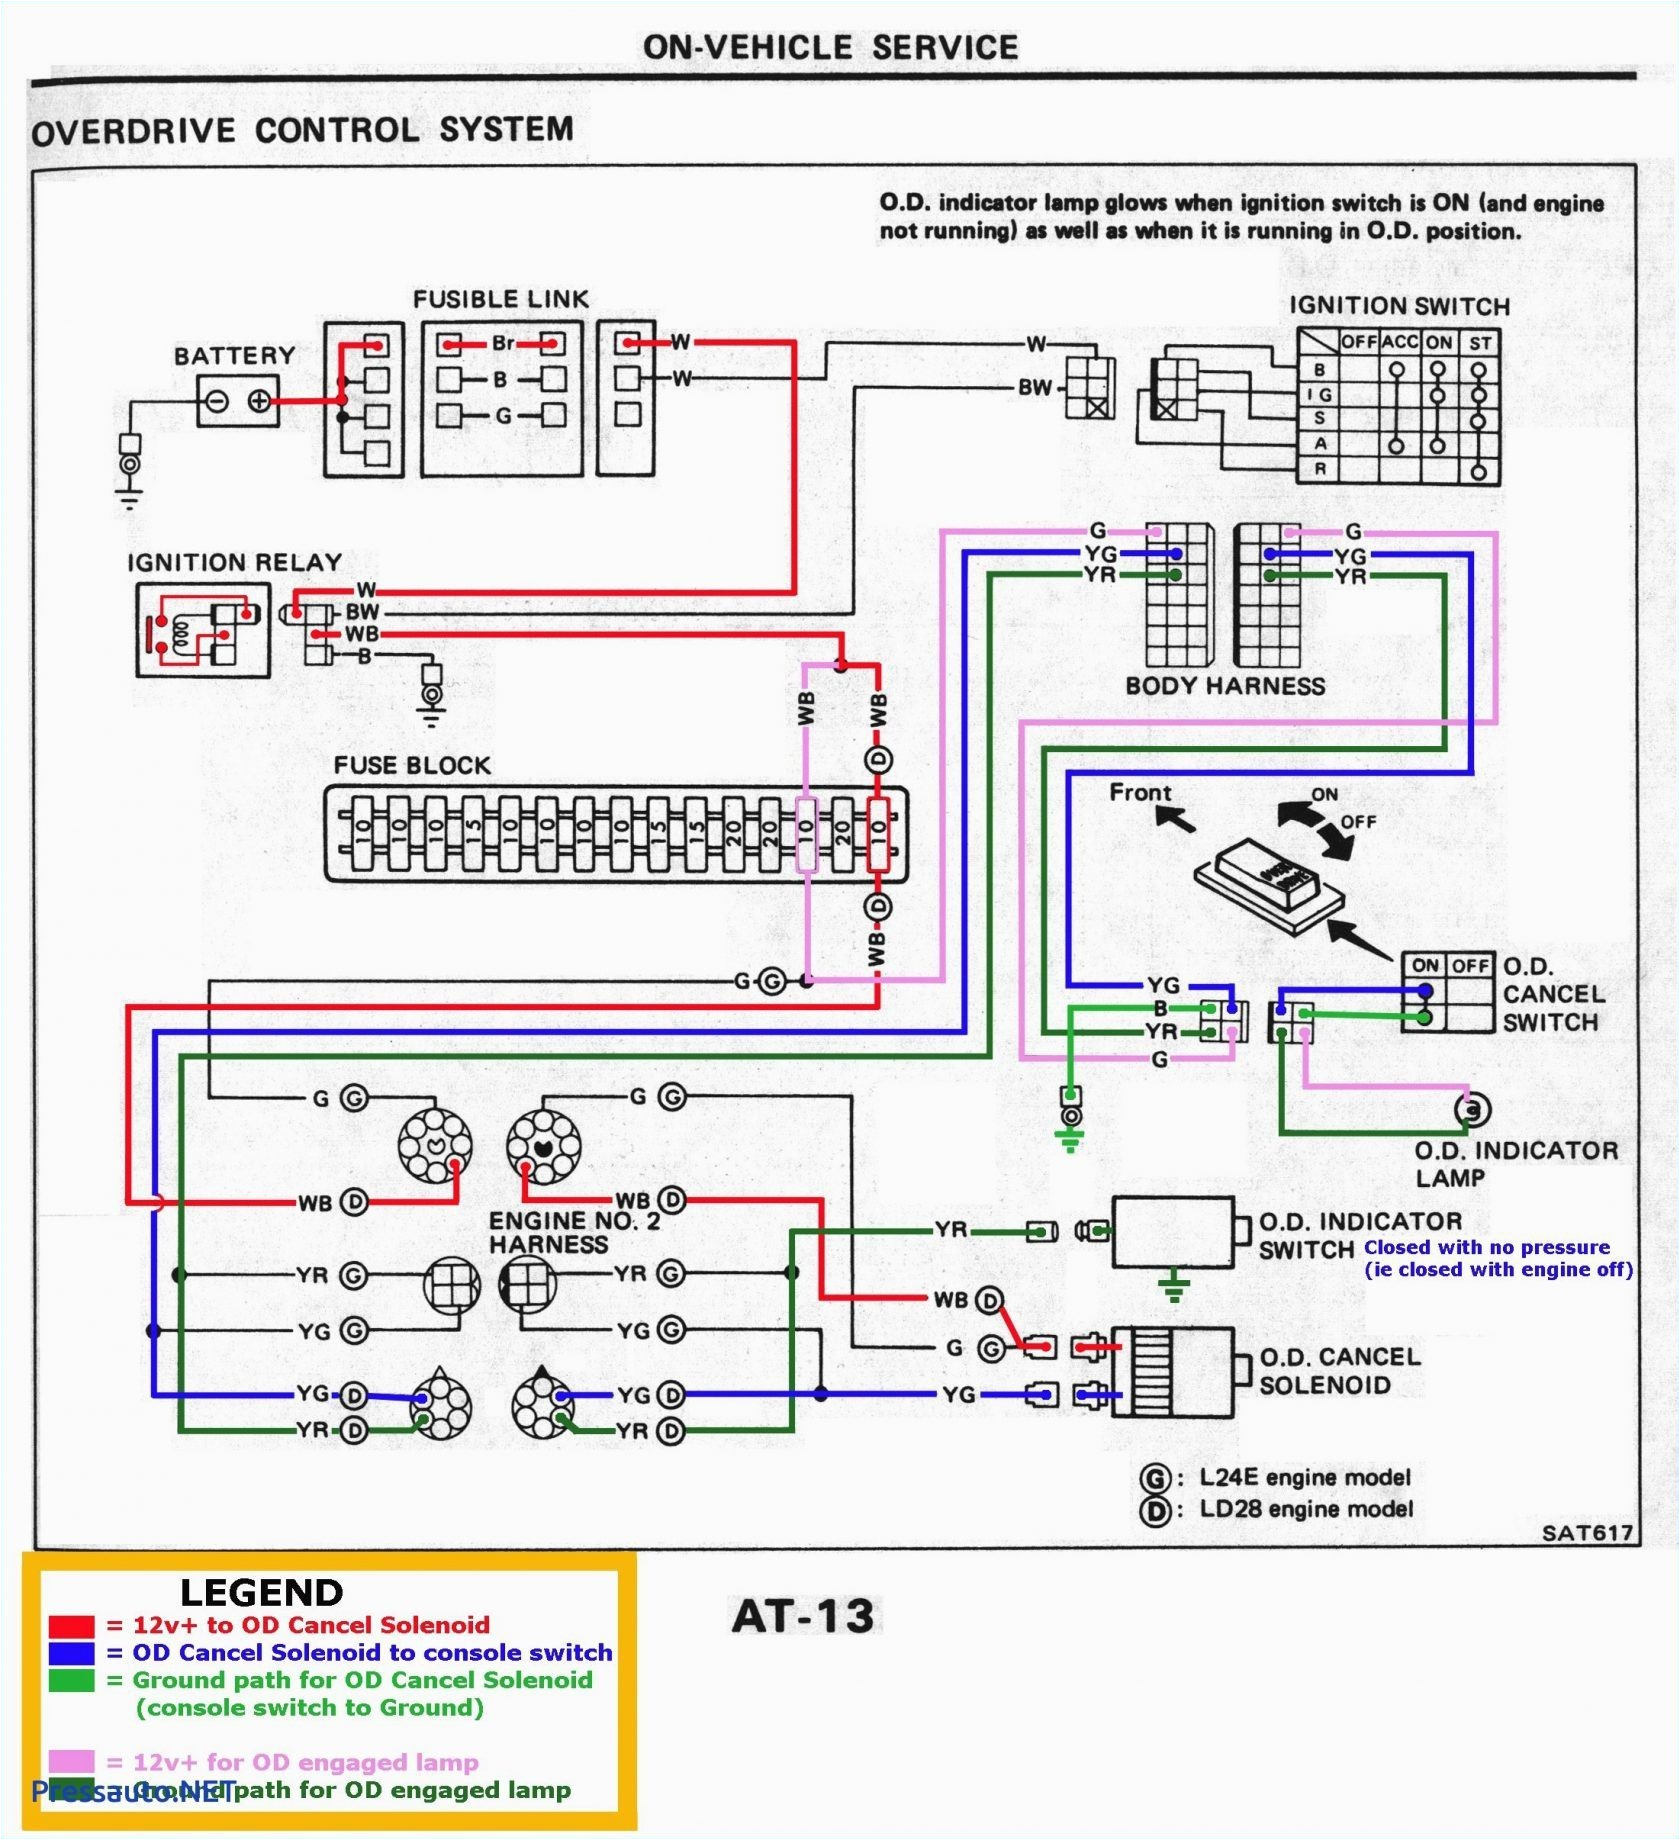 05 f150 fuse box diagram lovely 2006 king ranch wiring diagram wiring diagram data today of 05 f150 fuse box diagram jpg